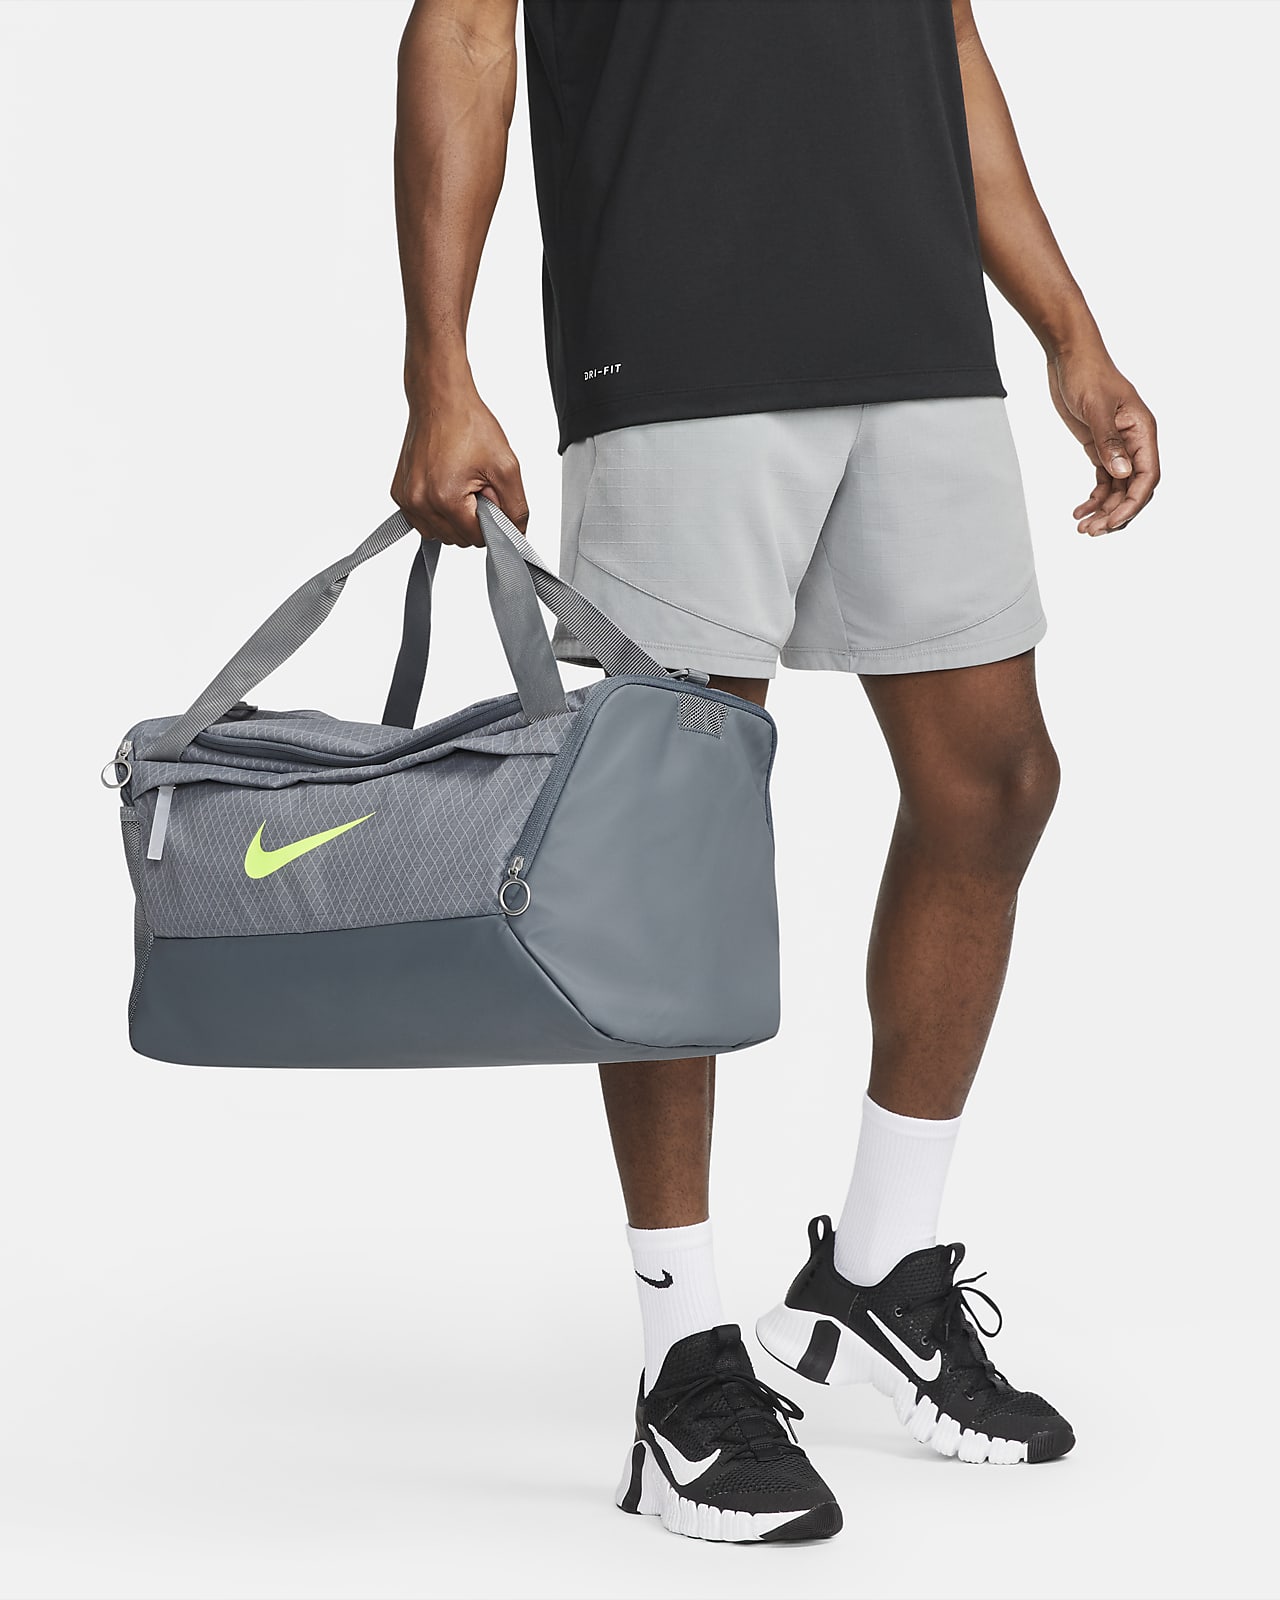 Nike Brasilia Medium Duffel Bag  Hands Down, These Are the 14